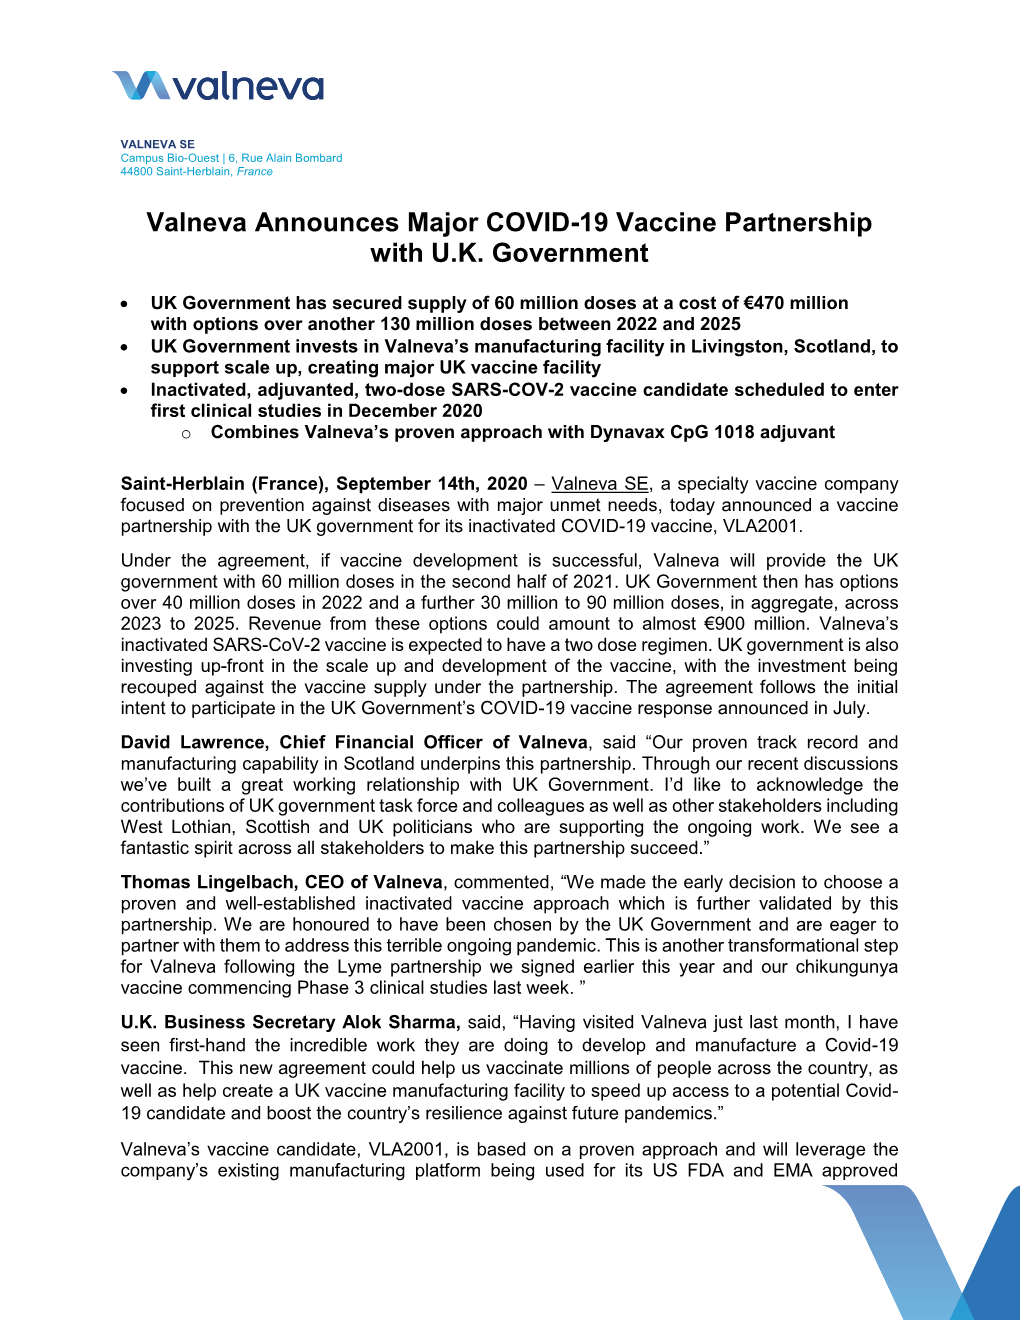 Valneva Announces Major COVID-19 Vaccine Partnership with U.K. Government